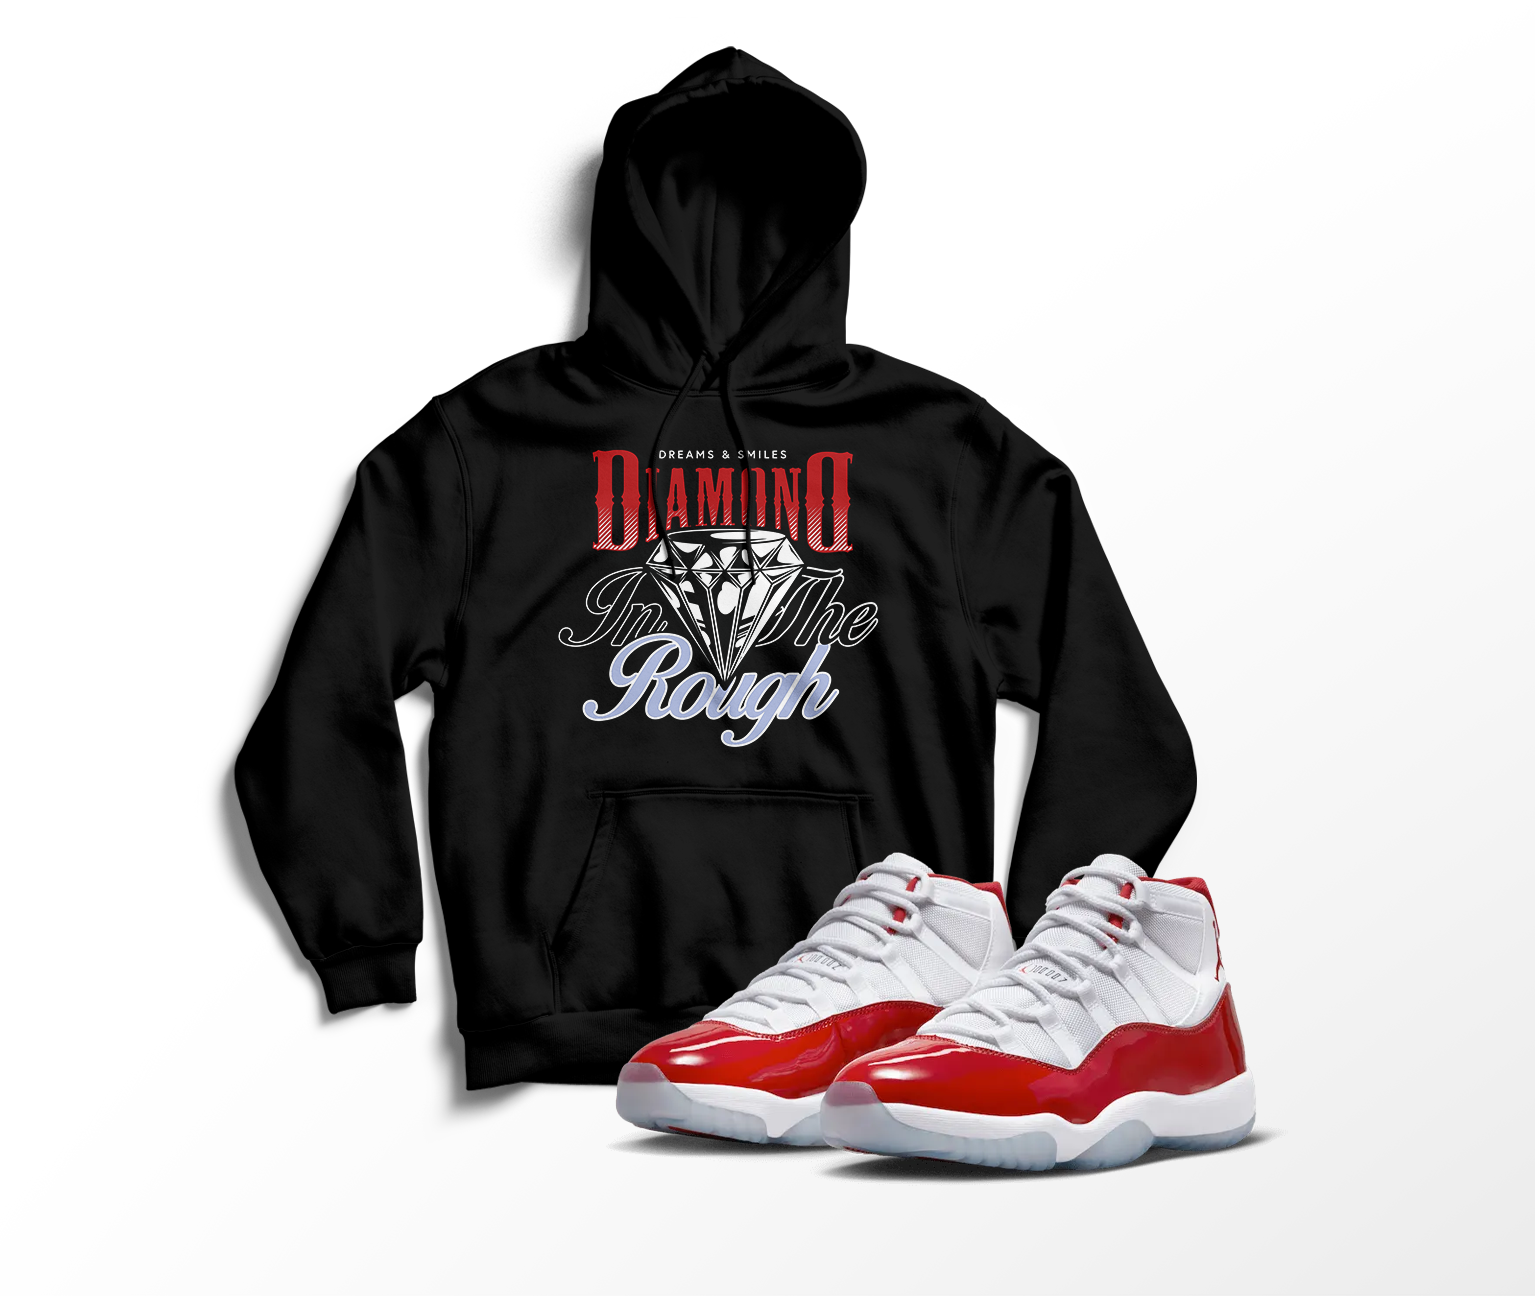 'Diamond In The Rough' Custom Graphic Hoodie To Match Air Jordan 11 Cherry Red